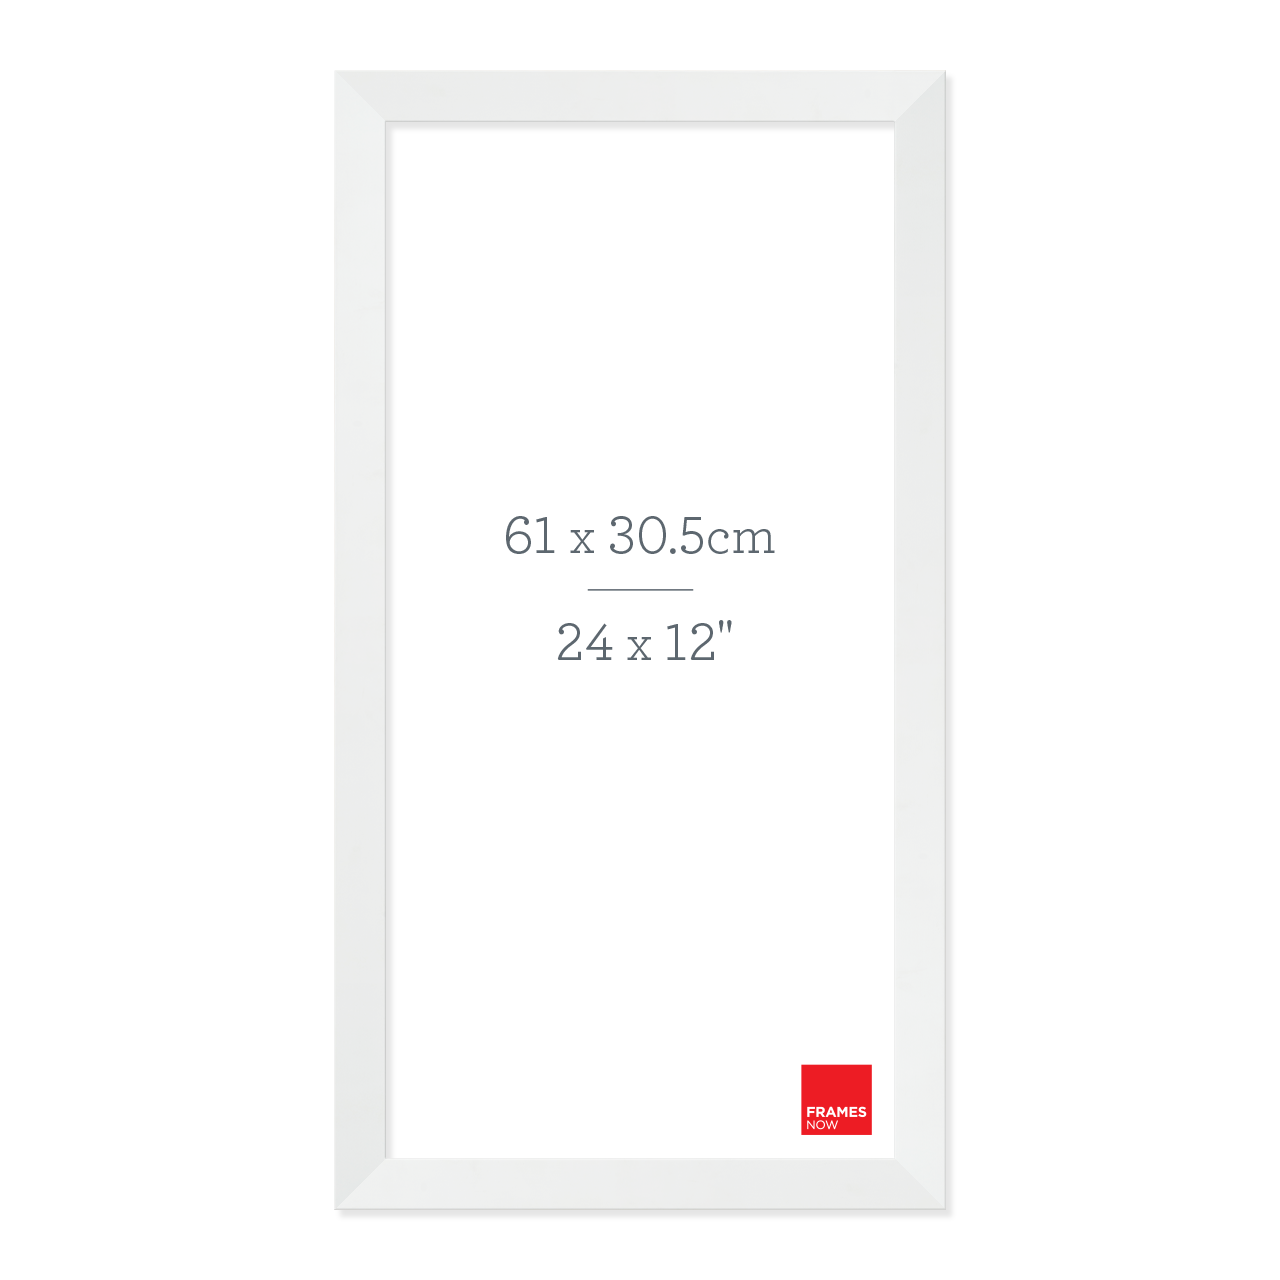 Premium Matte White Panoramic Picture Frame for 61 x 30.5cm Artwork